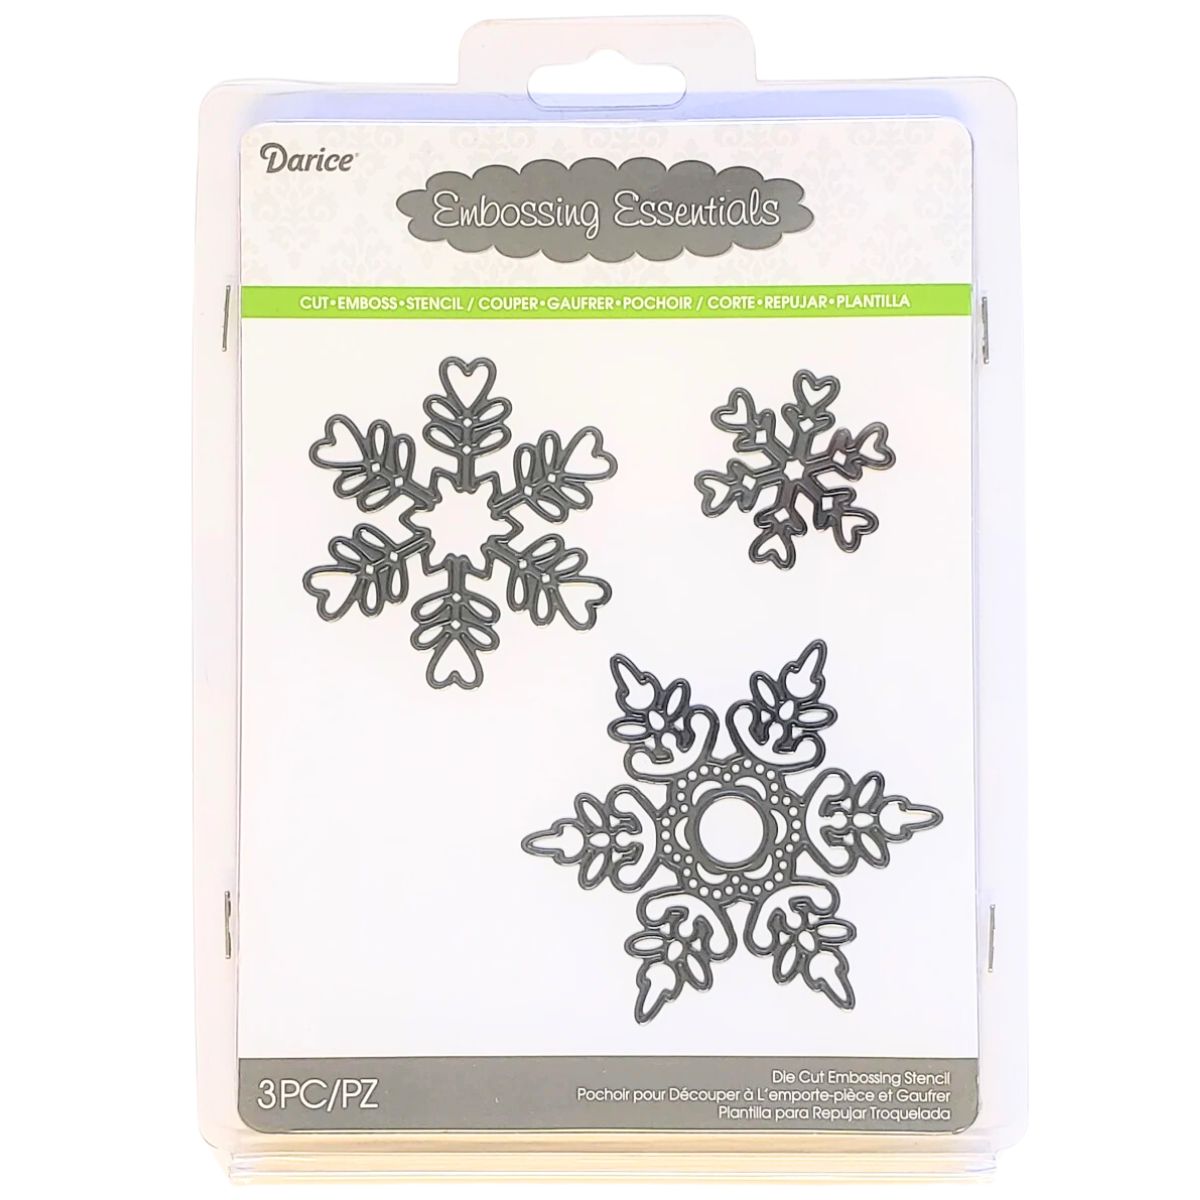 Suaje de Corte de Copo de Nieve / Assorted Snowflakes